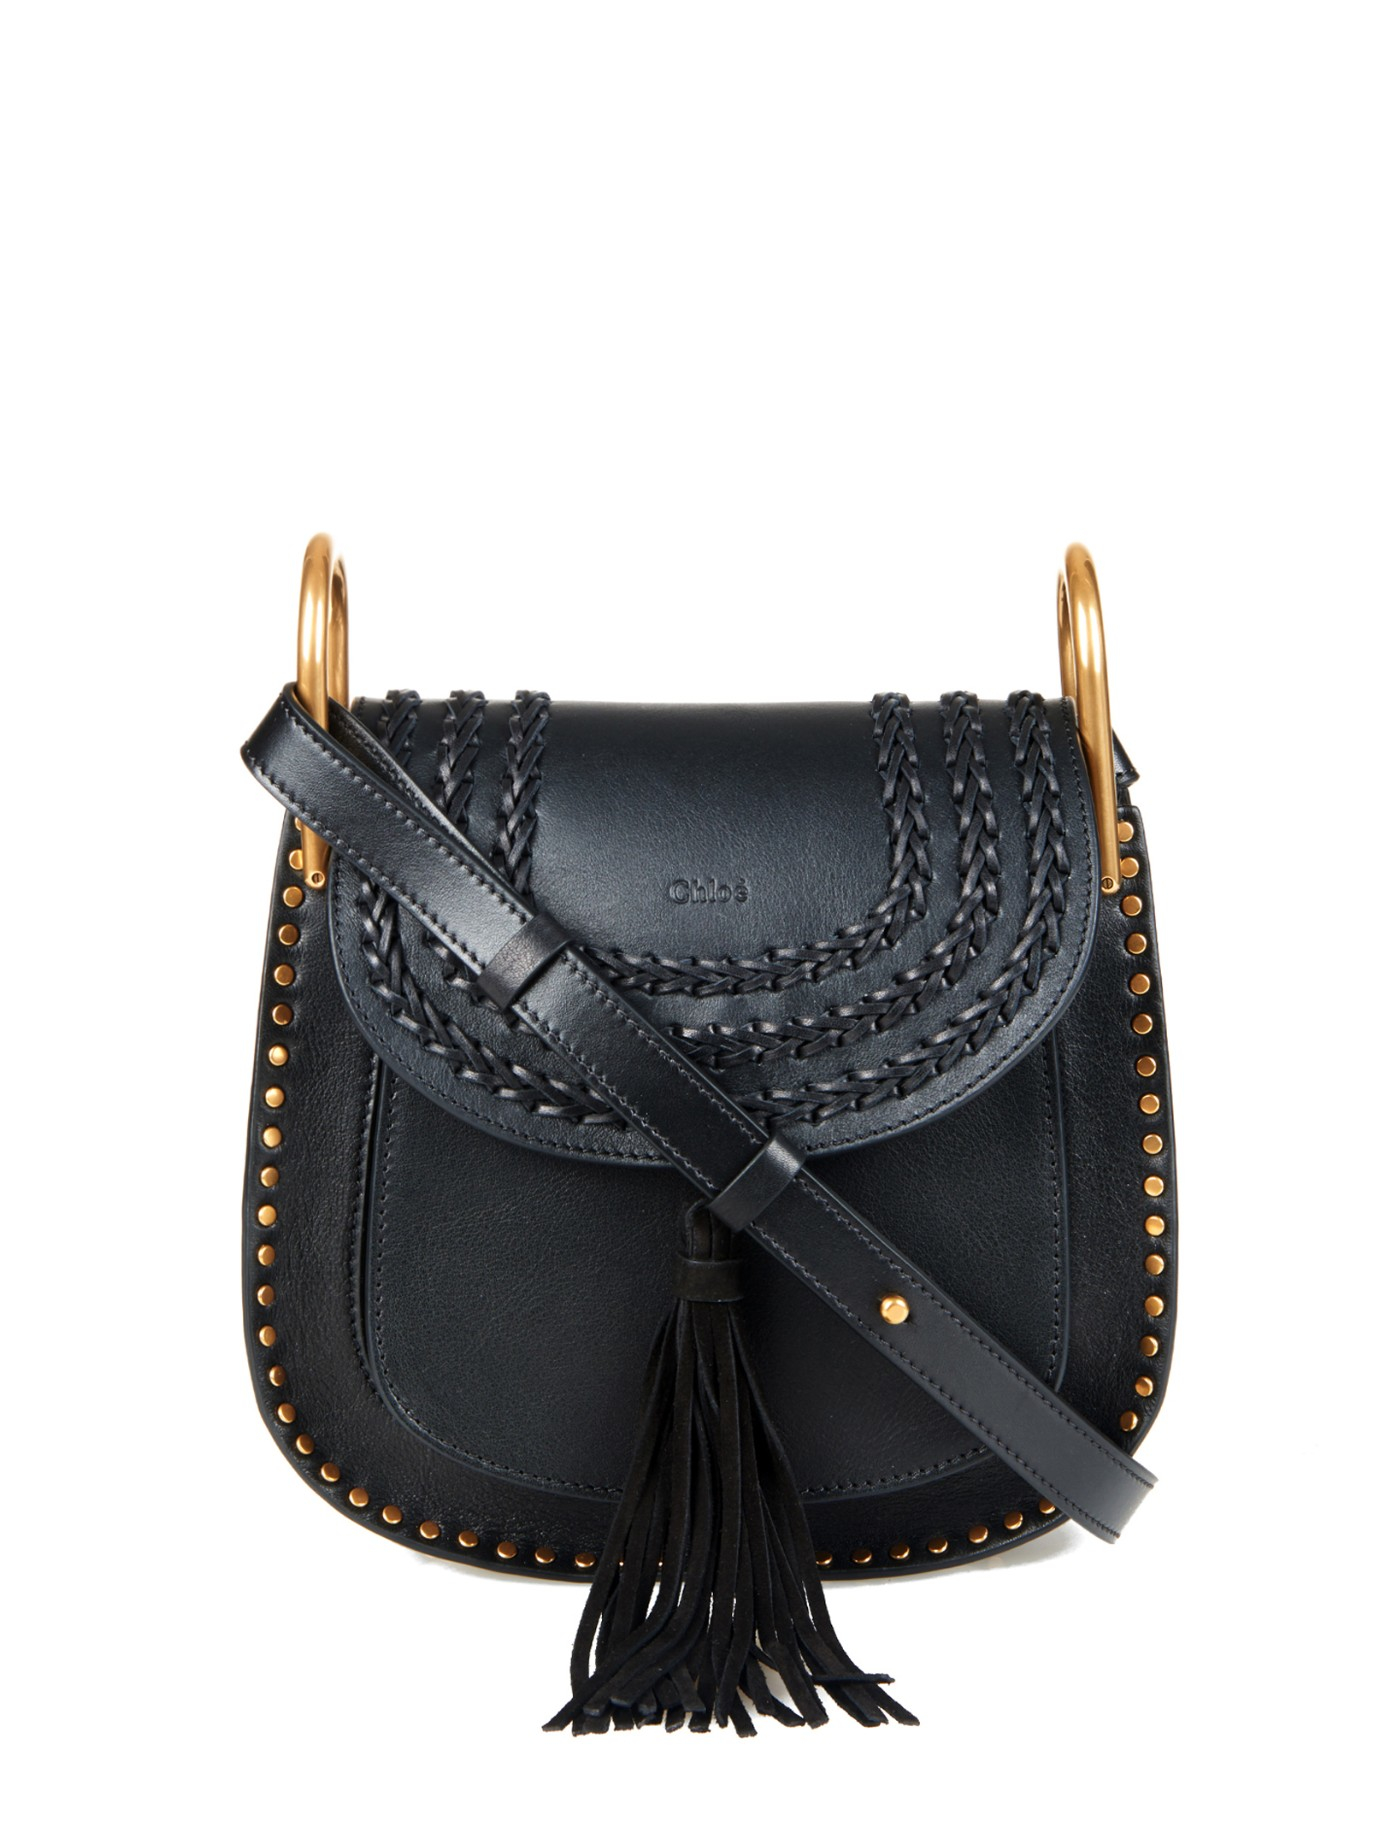 chloe bags online - Chlo Small Hudson Shoulder Bag in Black | Lyst